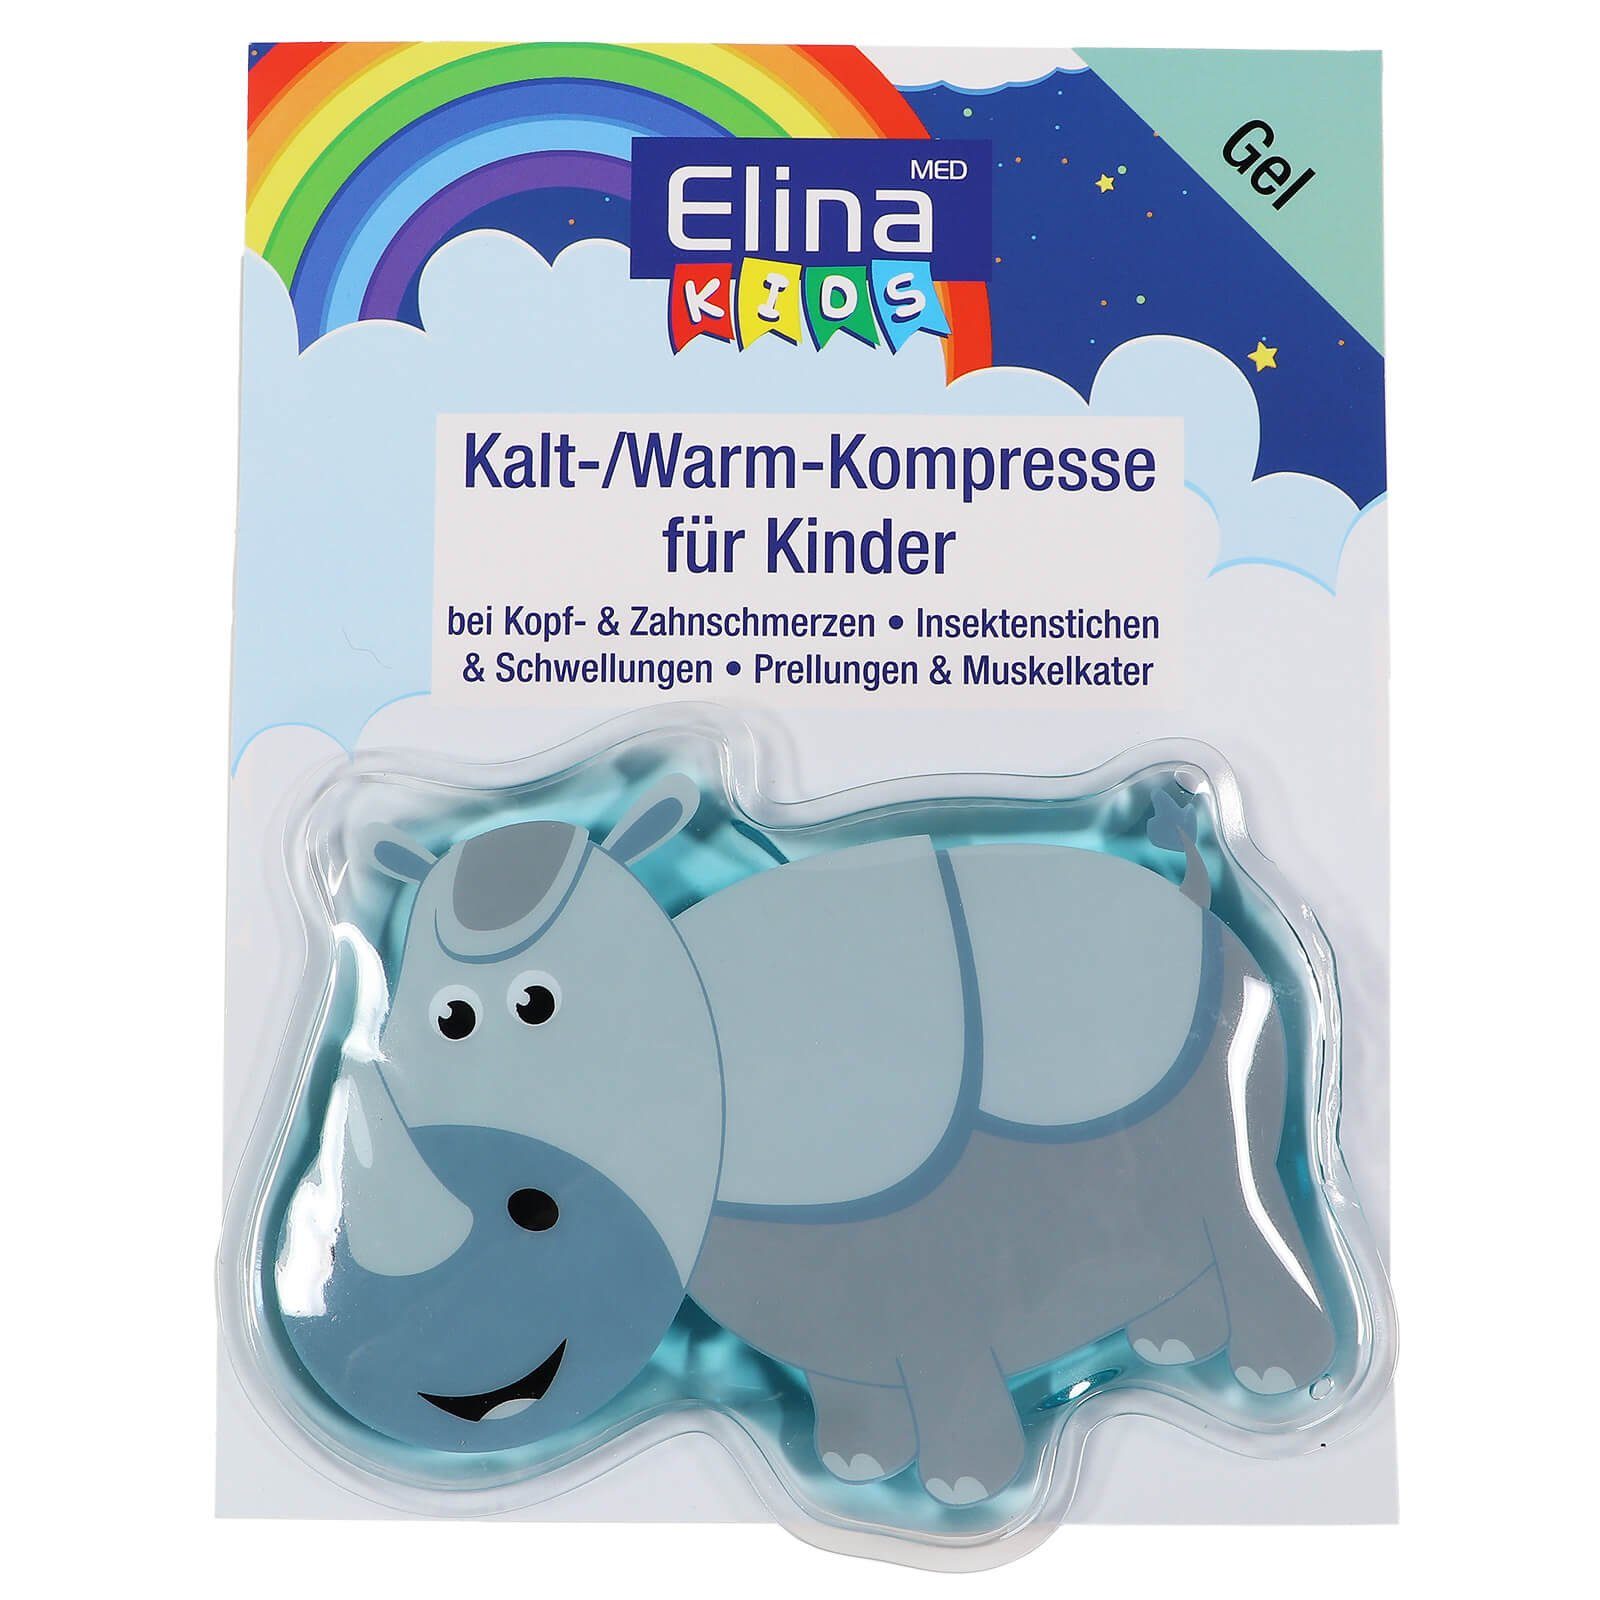 Jean Products Kalt-Warm-Kompresse Kinder Kompresse Gel Pad Kids warm kalt -  Motiv: Nilpferd, Kältetherapie, Wärmetherapie